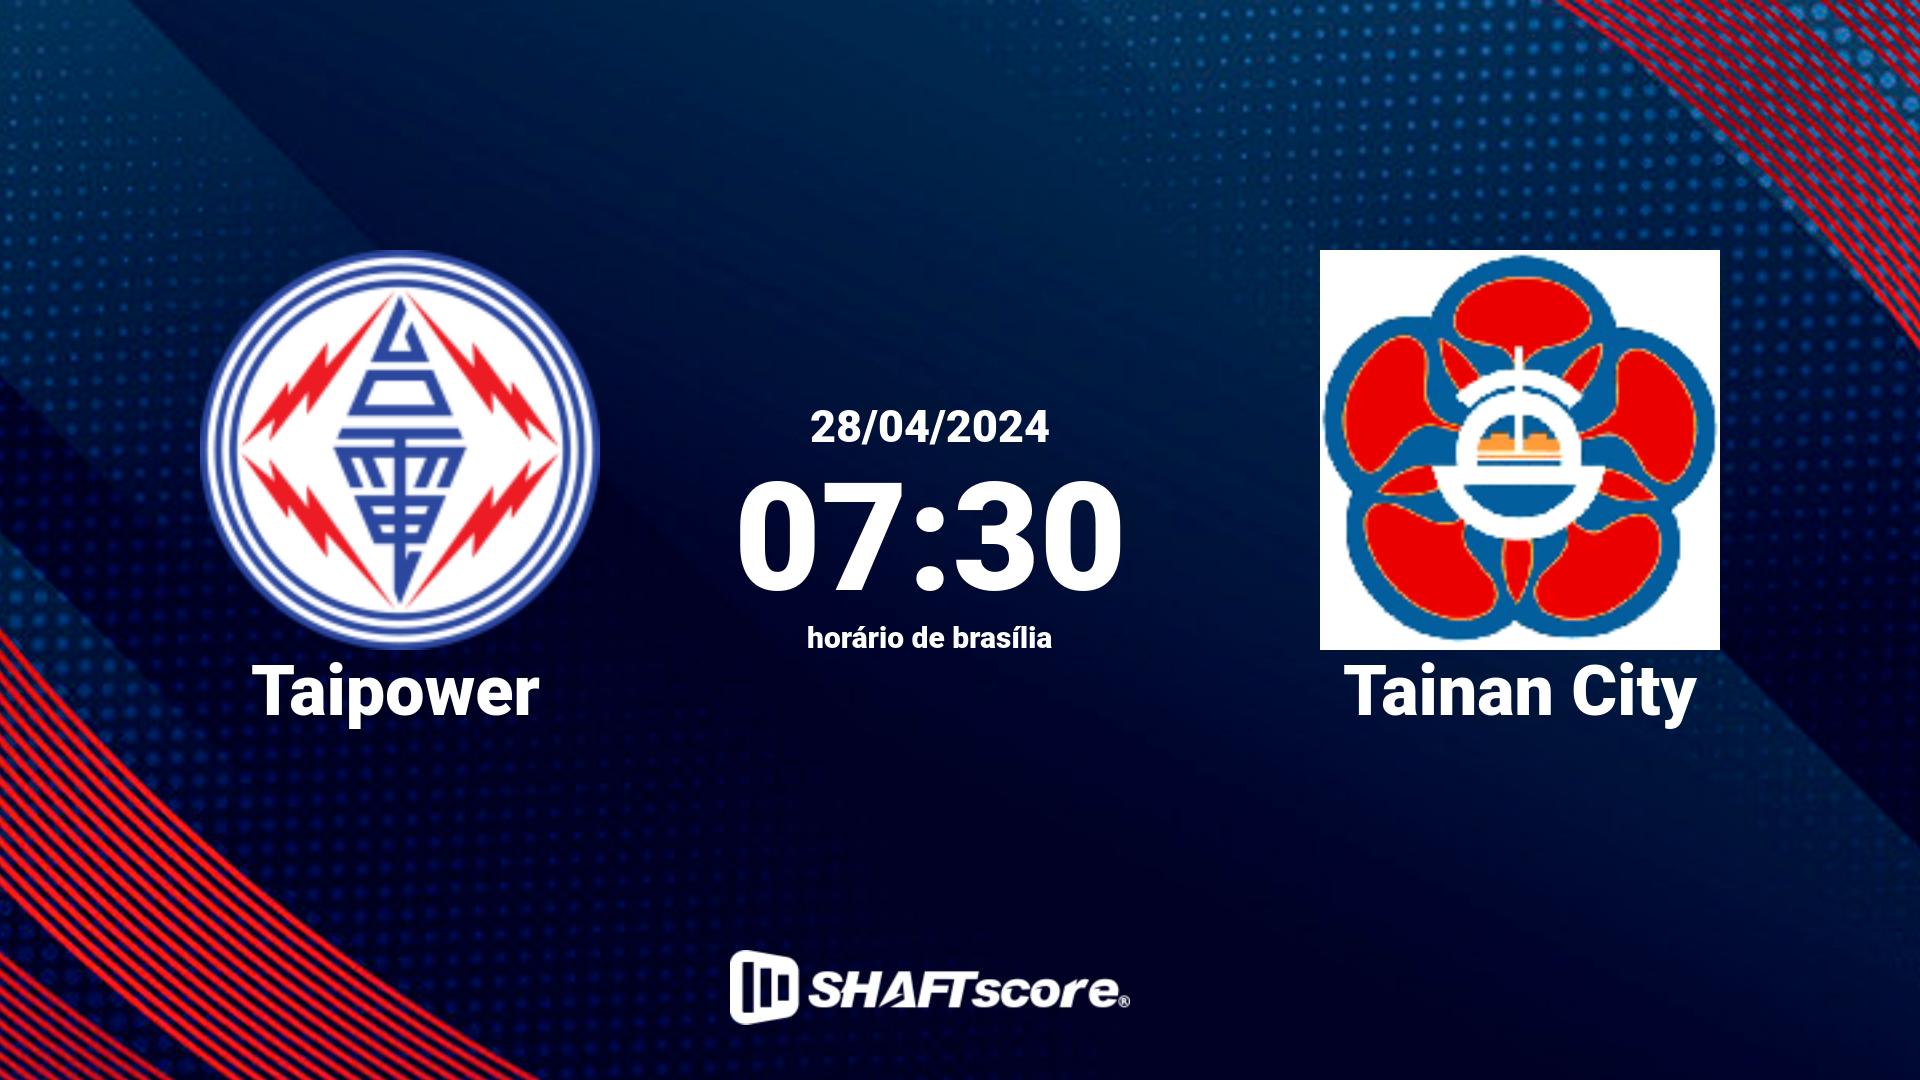 Estatísticas do jogo Taipower vs Tainan City 28.04 07:30